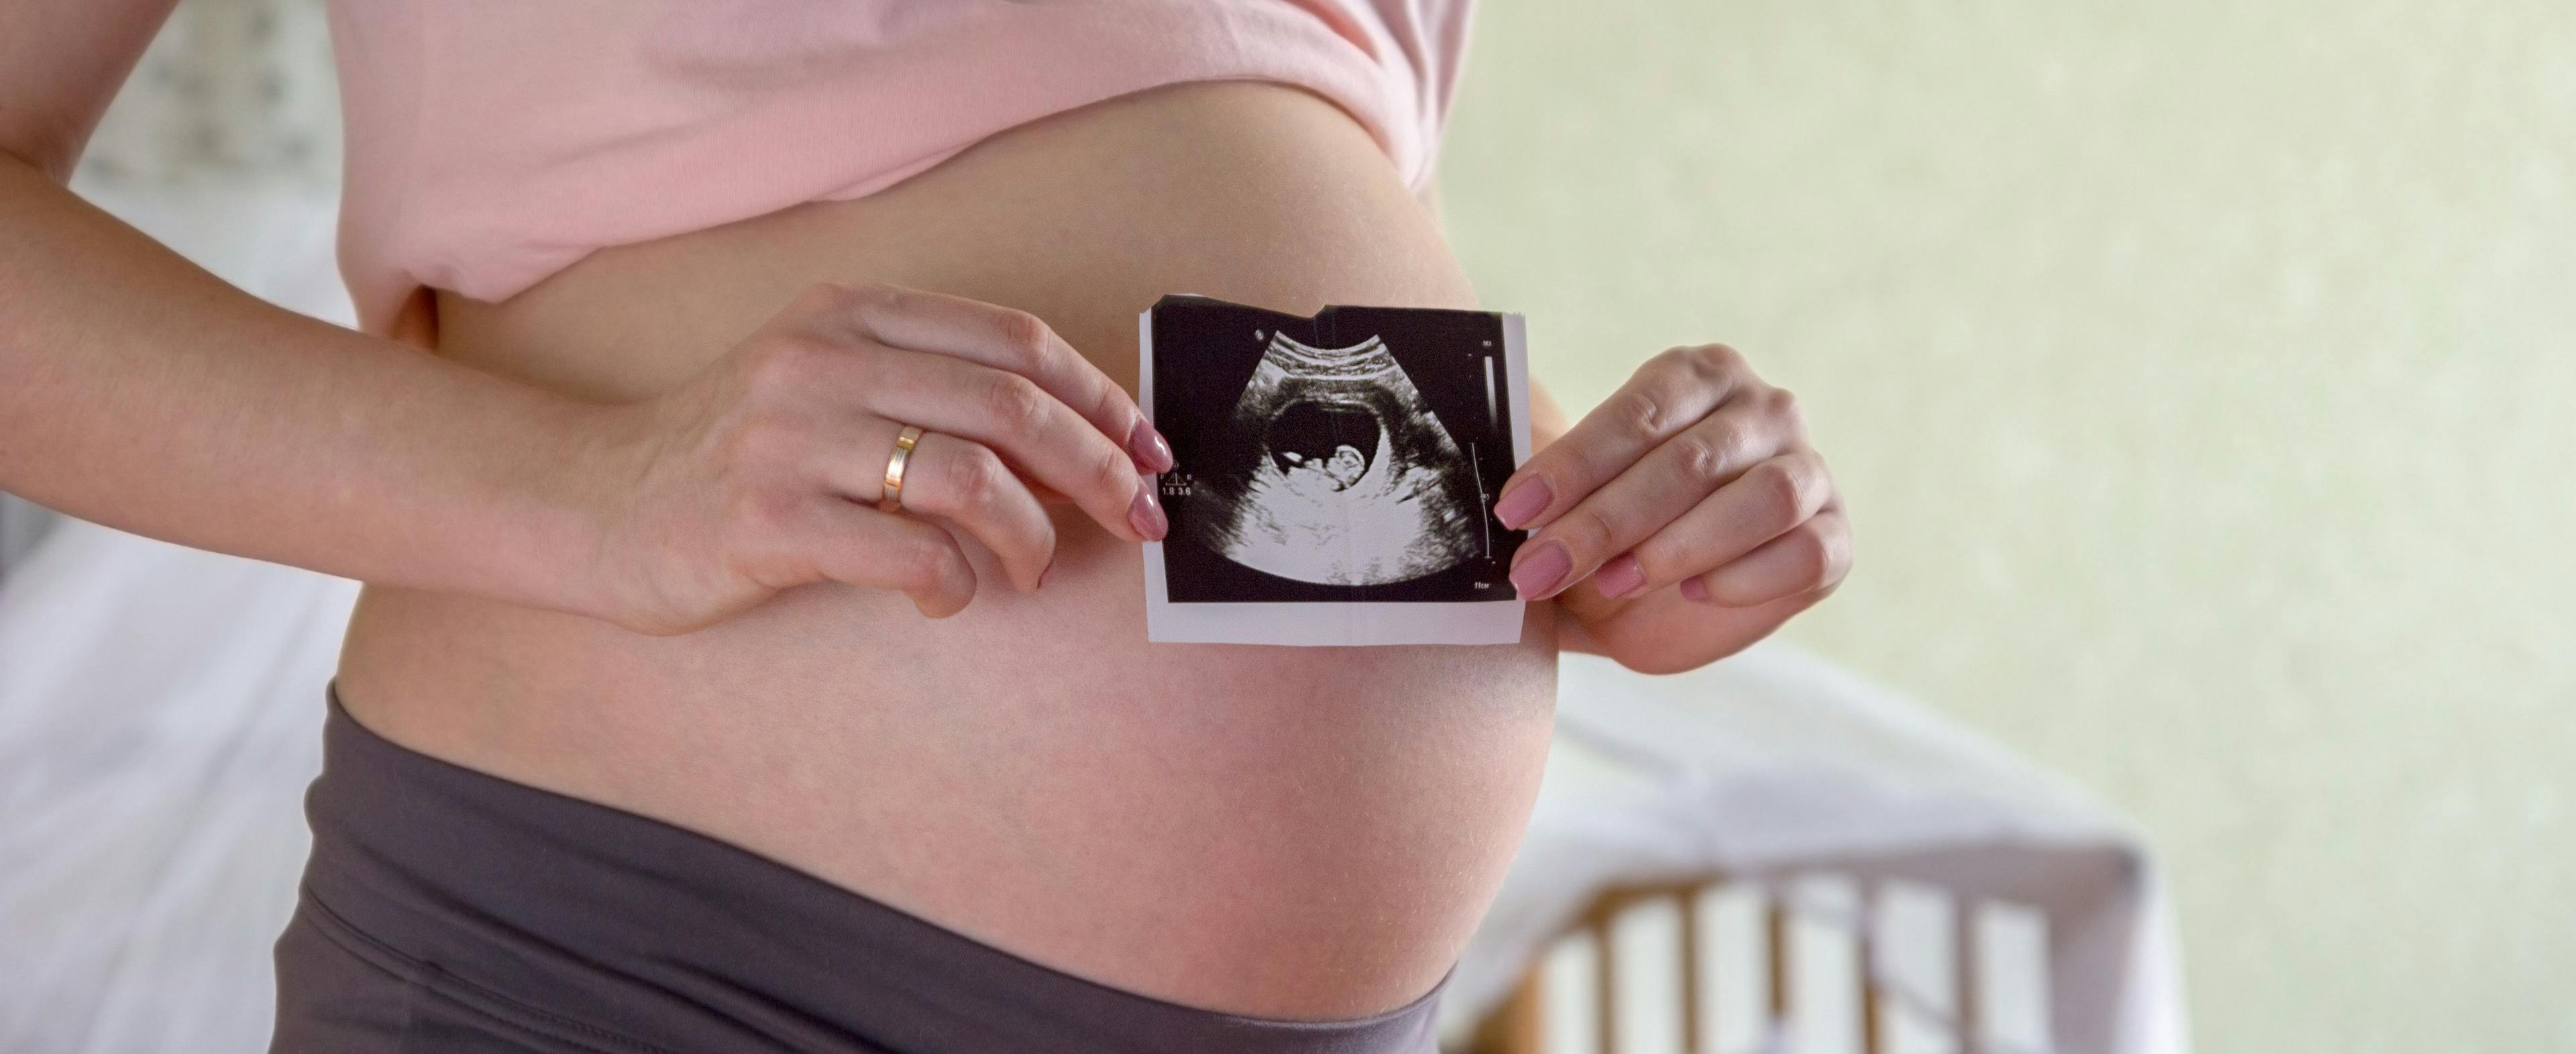 Pregnant woman holding sonogram | Image Credit: © ruslan_khismatov - © ruslan_khismatov - stock.adobe.com.